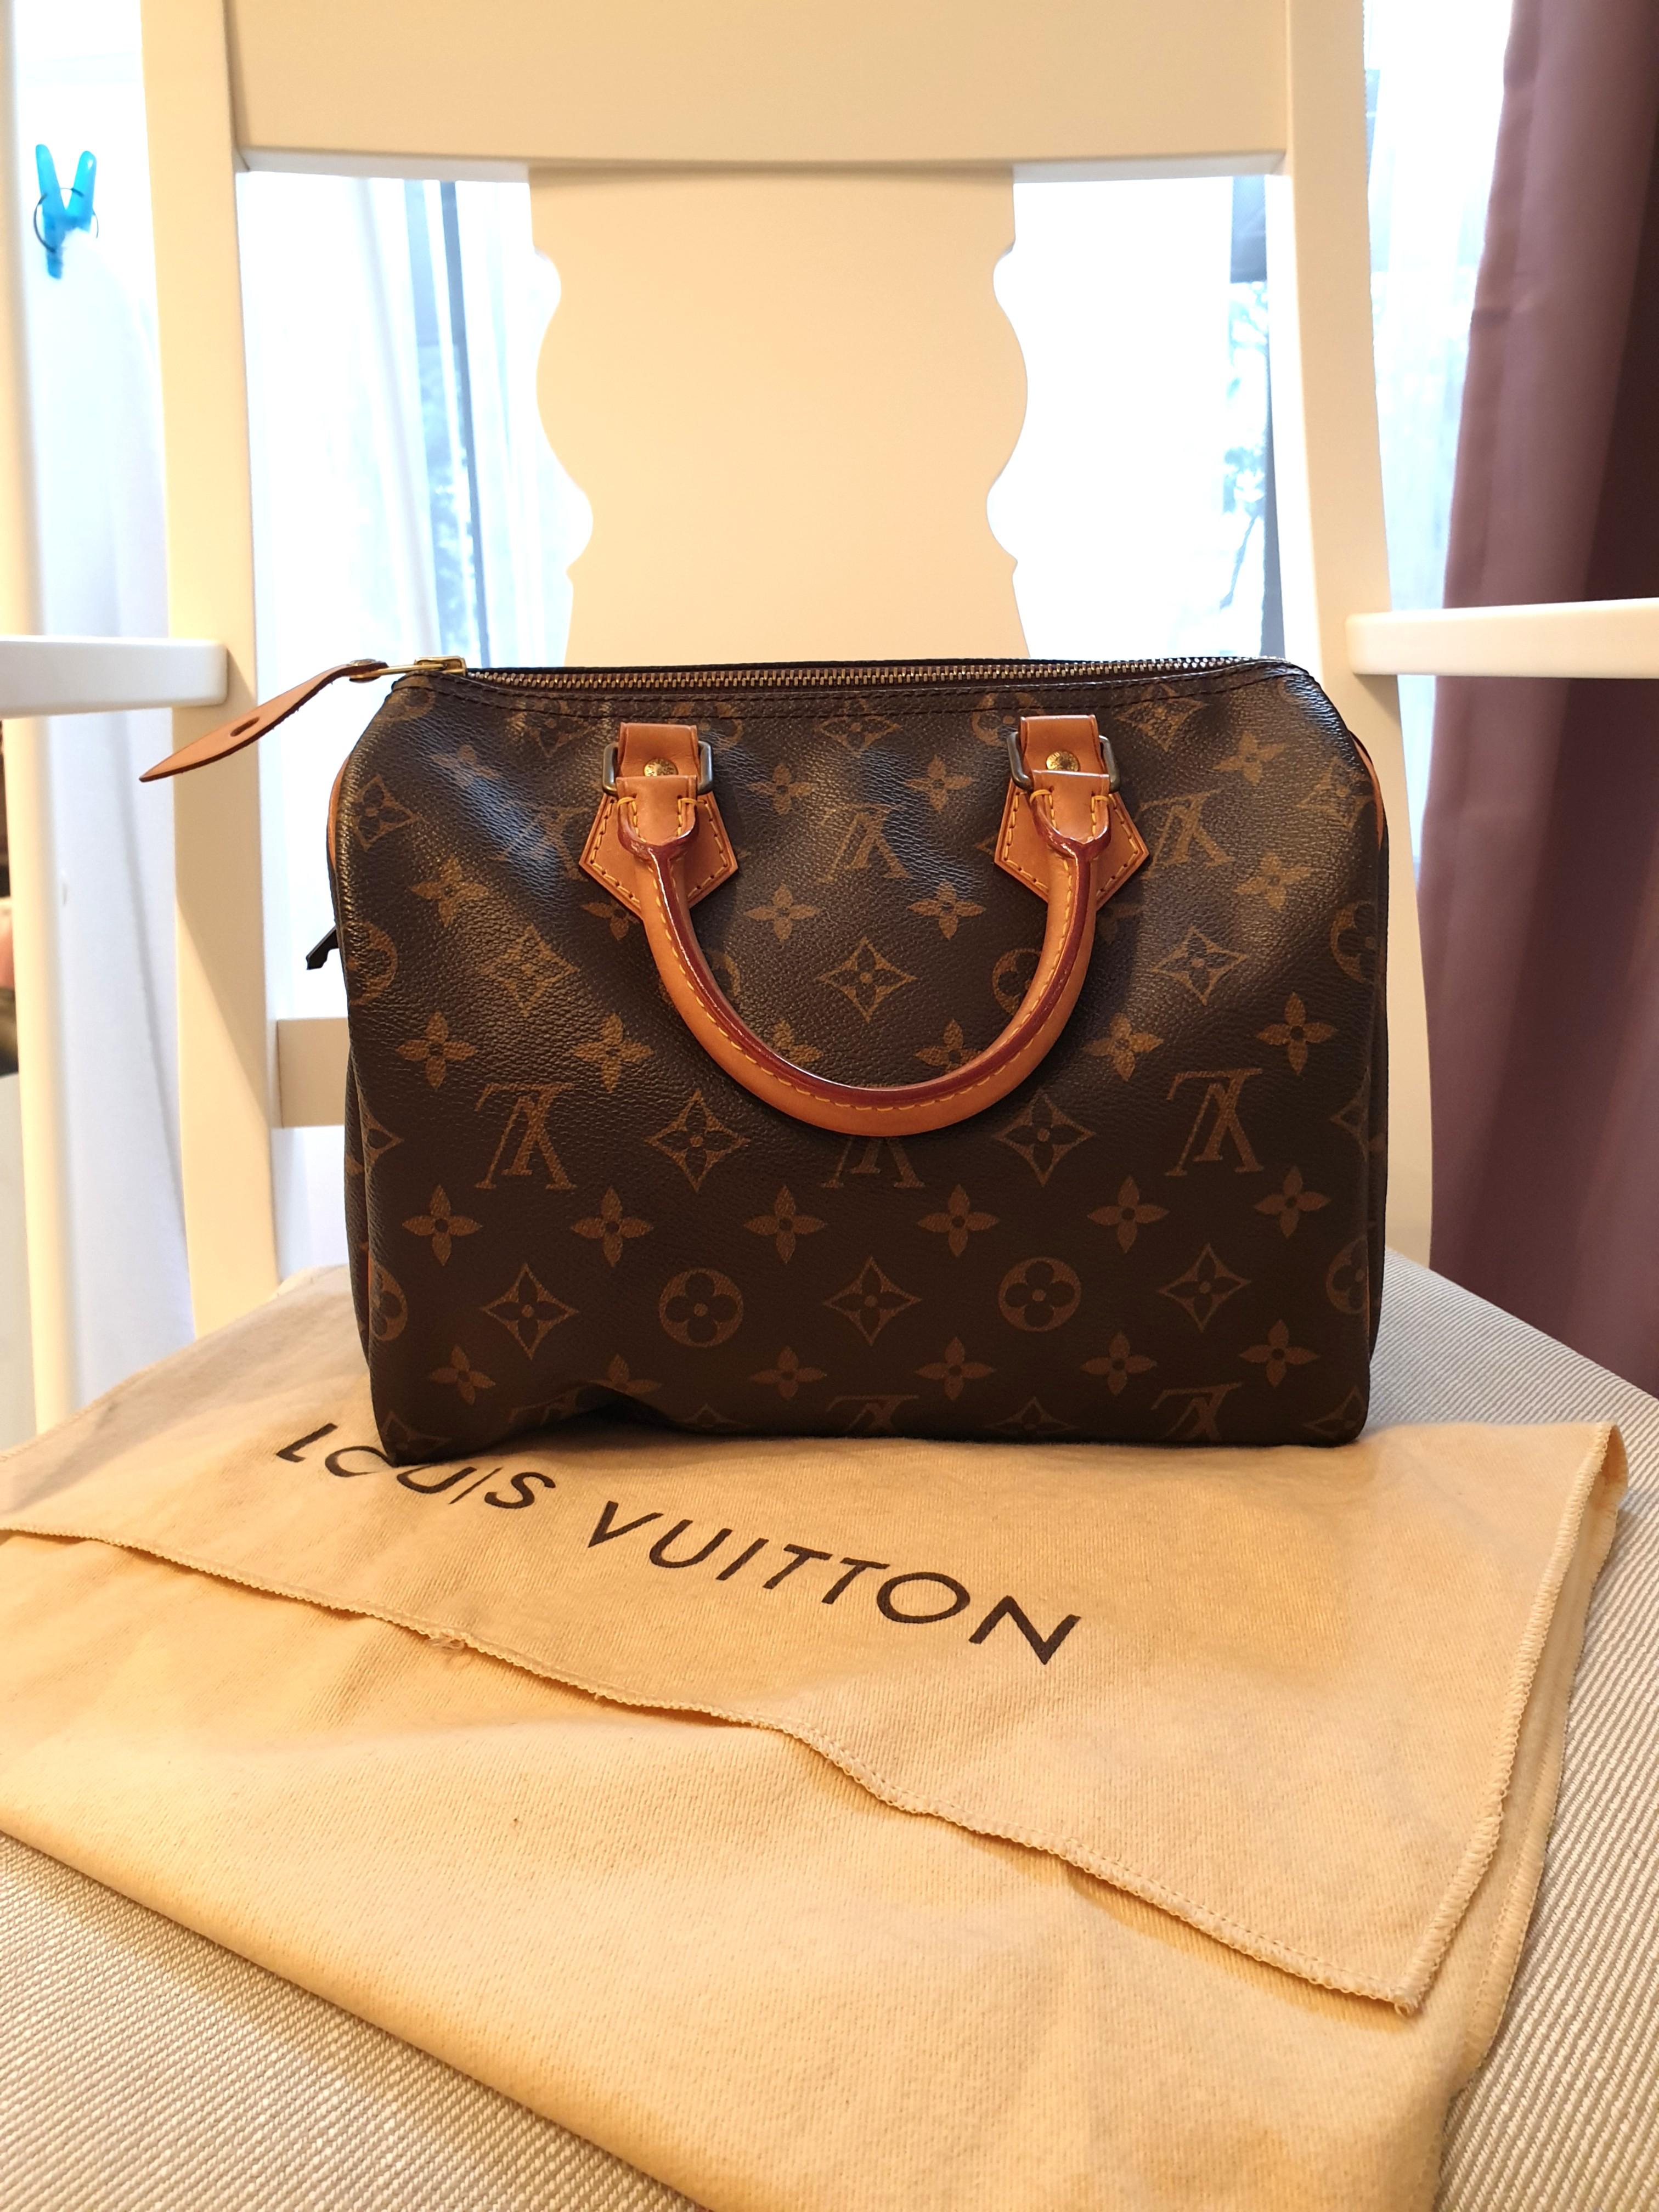 Toeval oppervlakte Dank u voor uw hulp Louis Vuitton Speedy 25, Luxury, Bags & Wallets, Handbags on Carousell